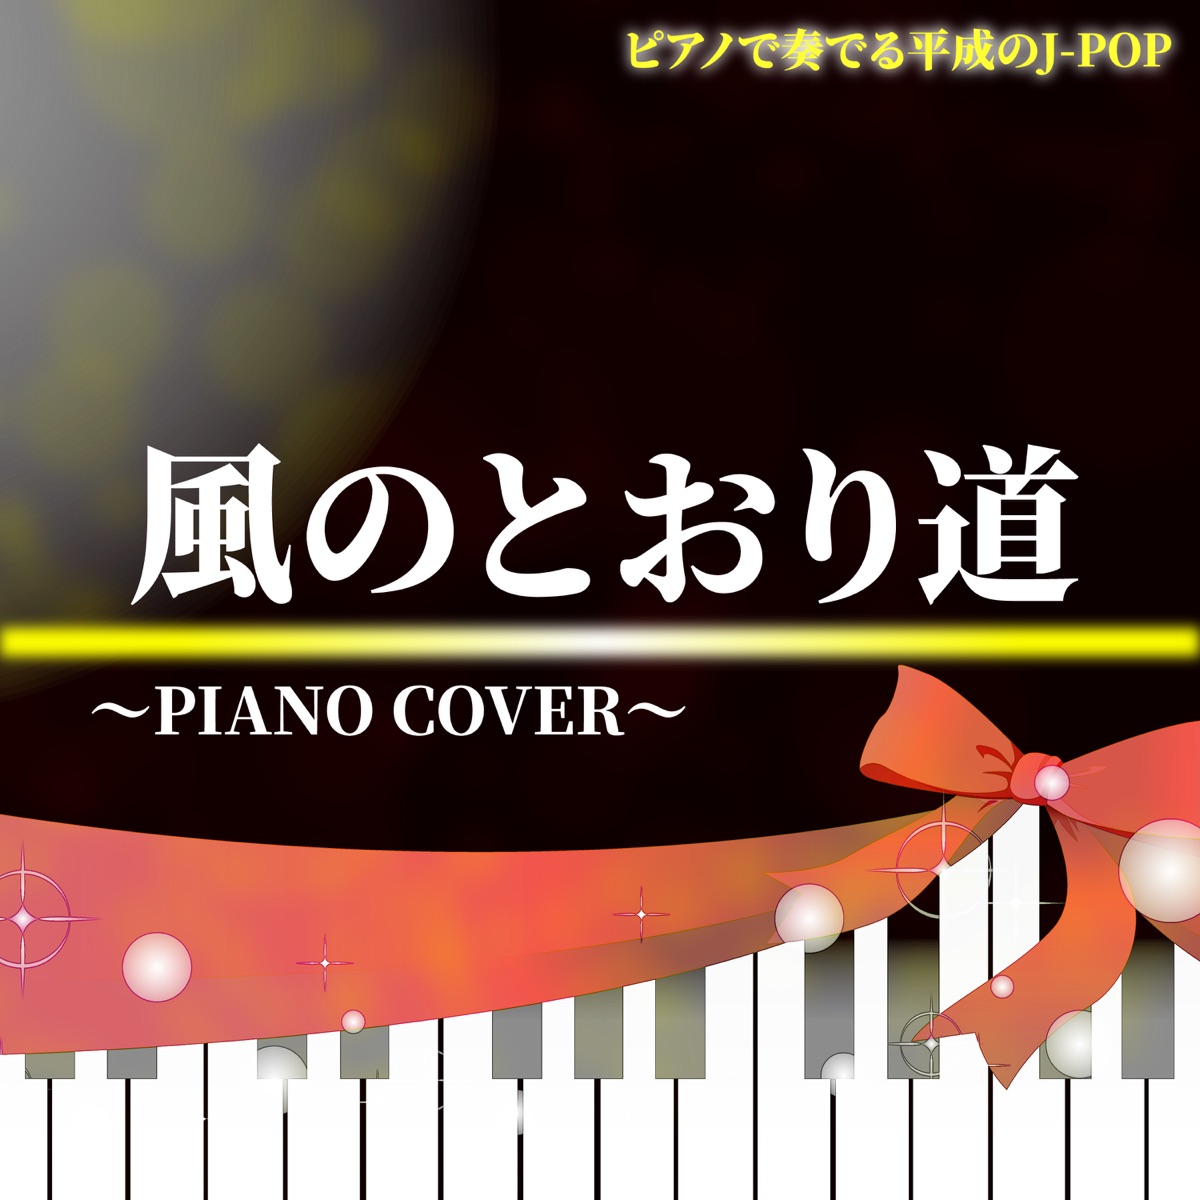 Piano de Tsuduru Ghibli Collection Vol.1 - Album by Nahoko - Apple Music